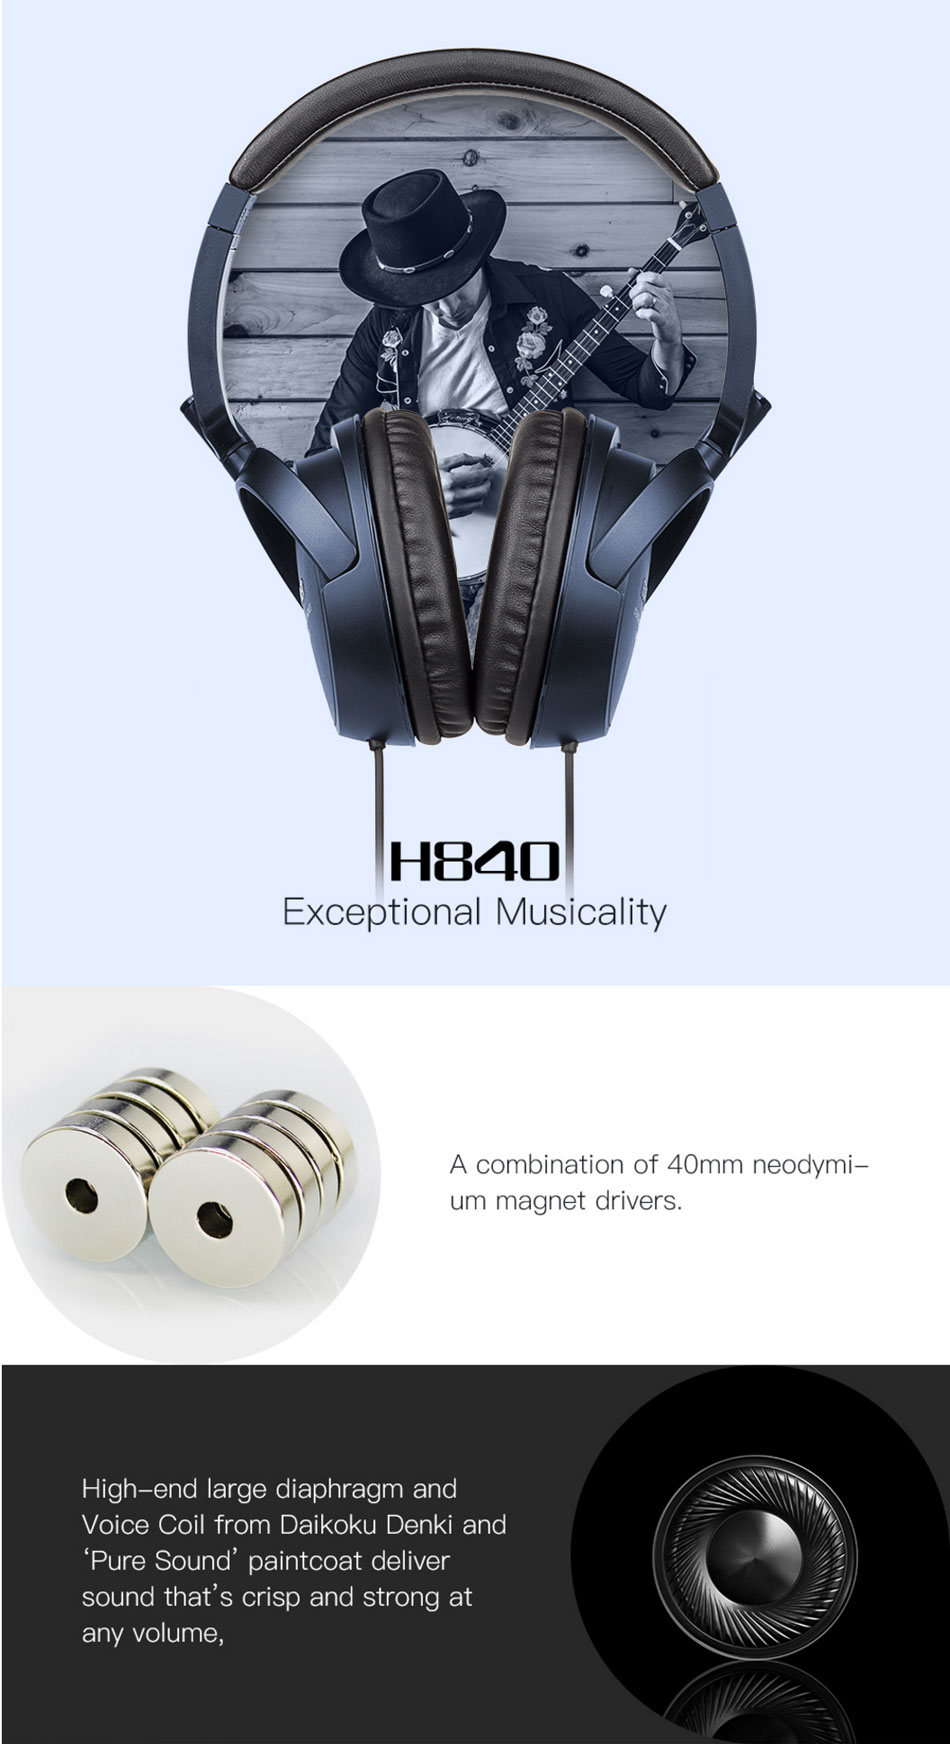 Edifier H840 Noise Cancelling Powerful Sound Ergonomic Ear Pads HIFI Headphone Headset 3.5mm AUX 84